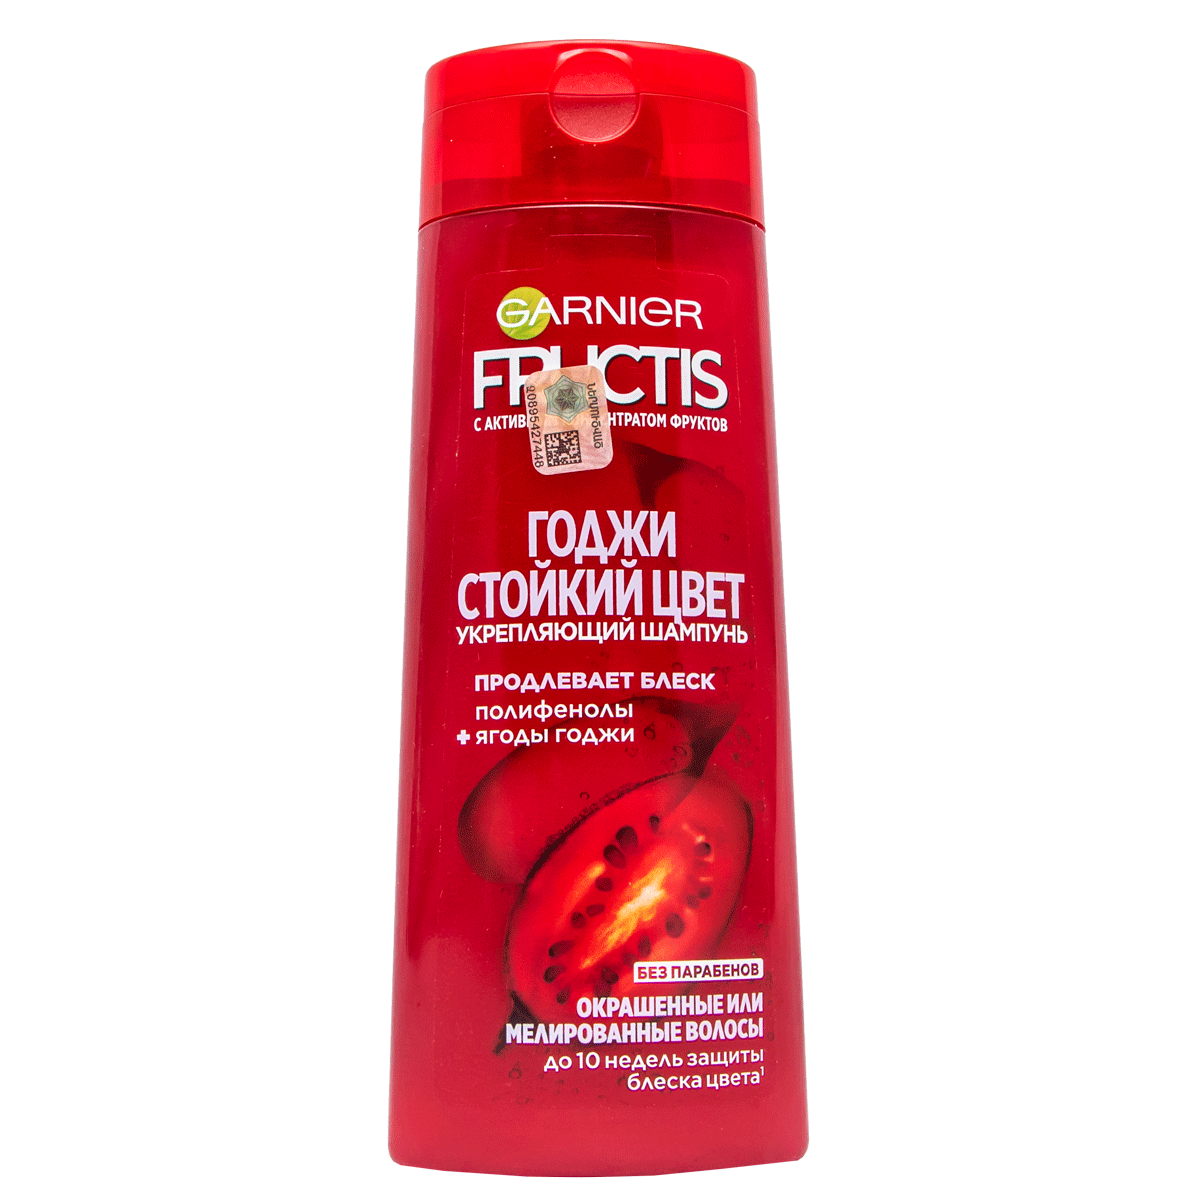 Shampoo Fructis